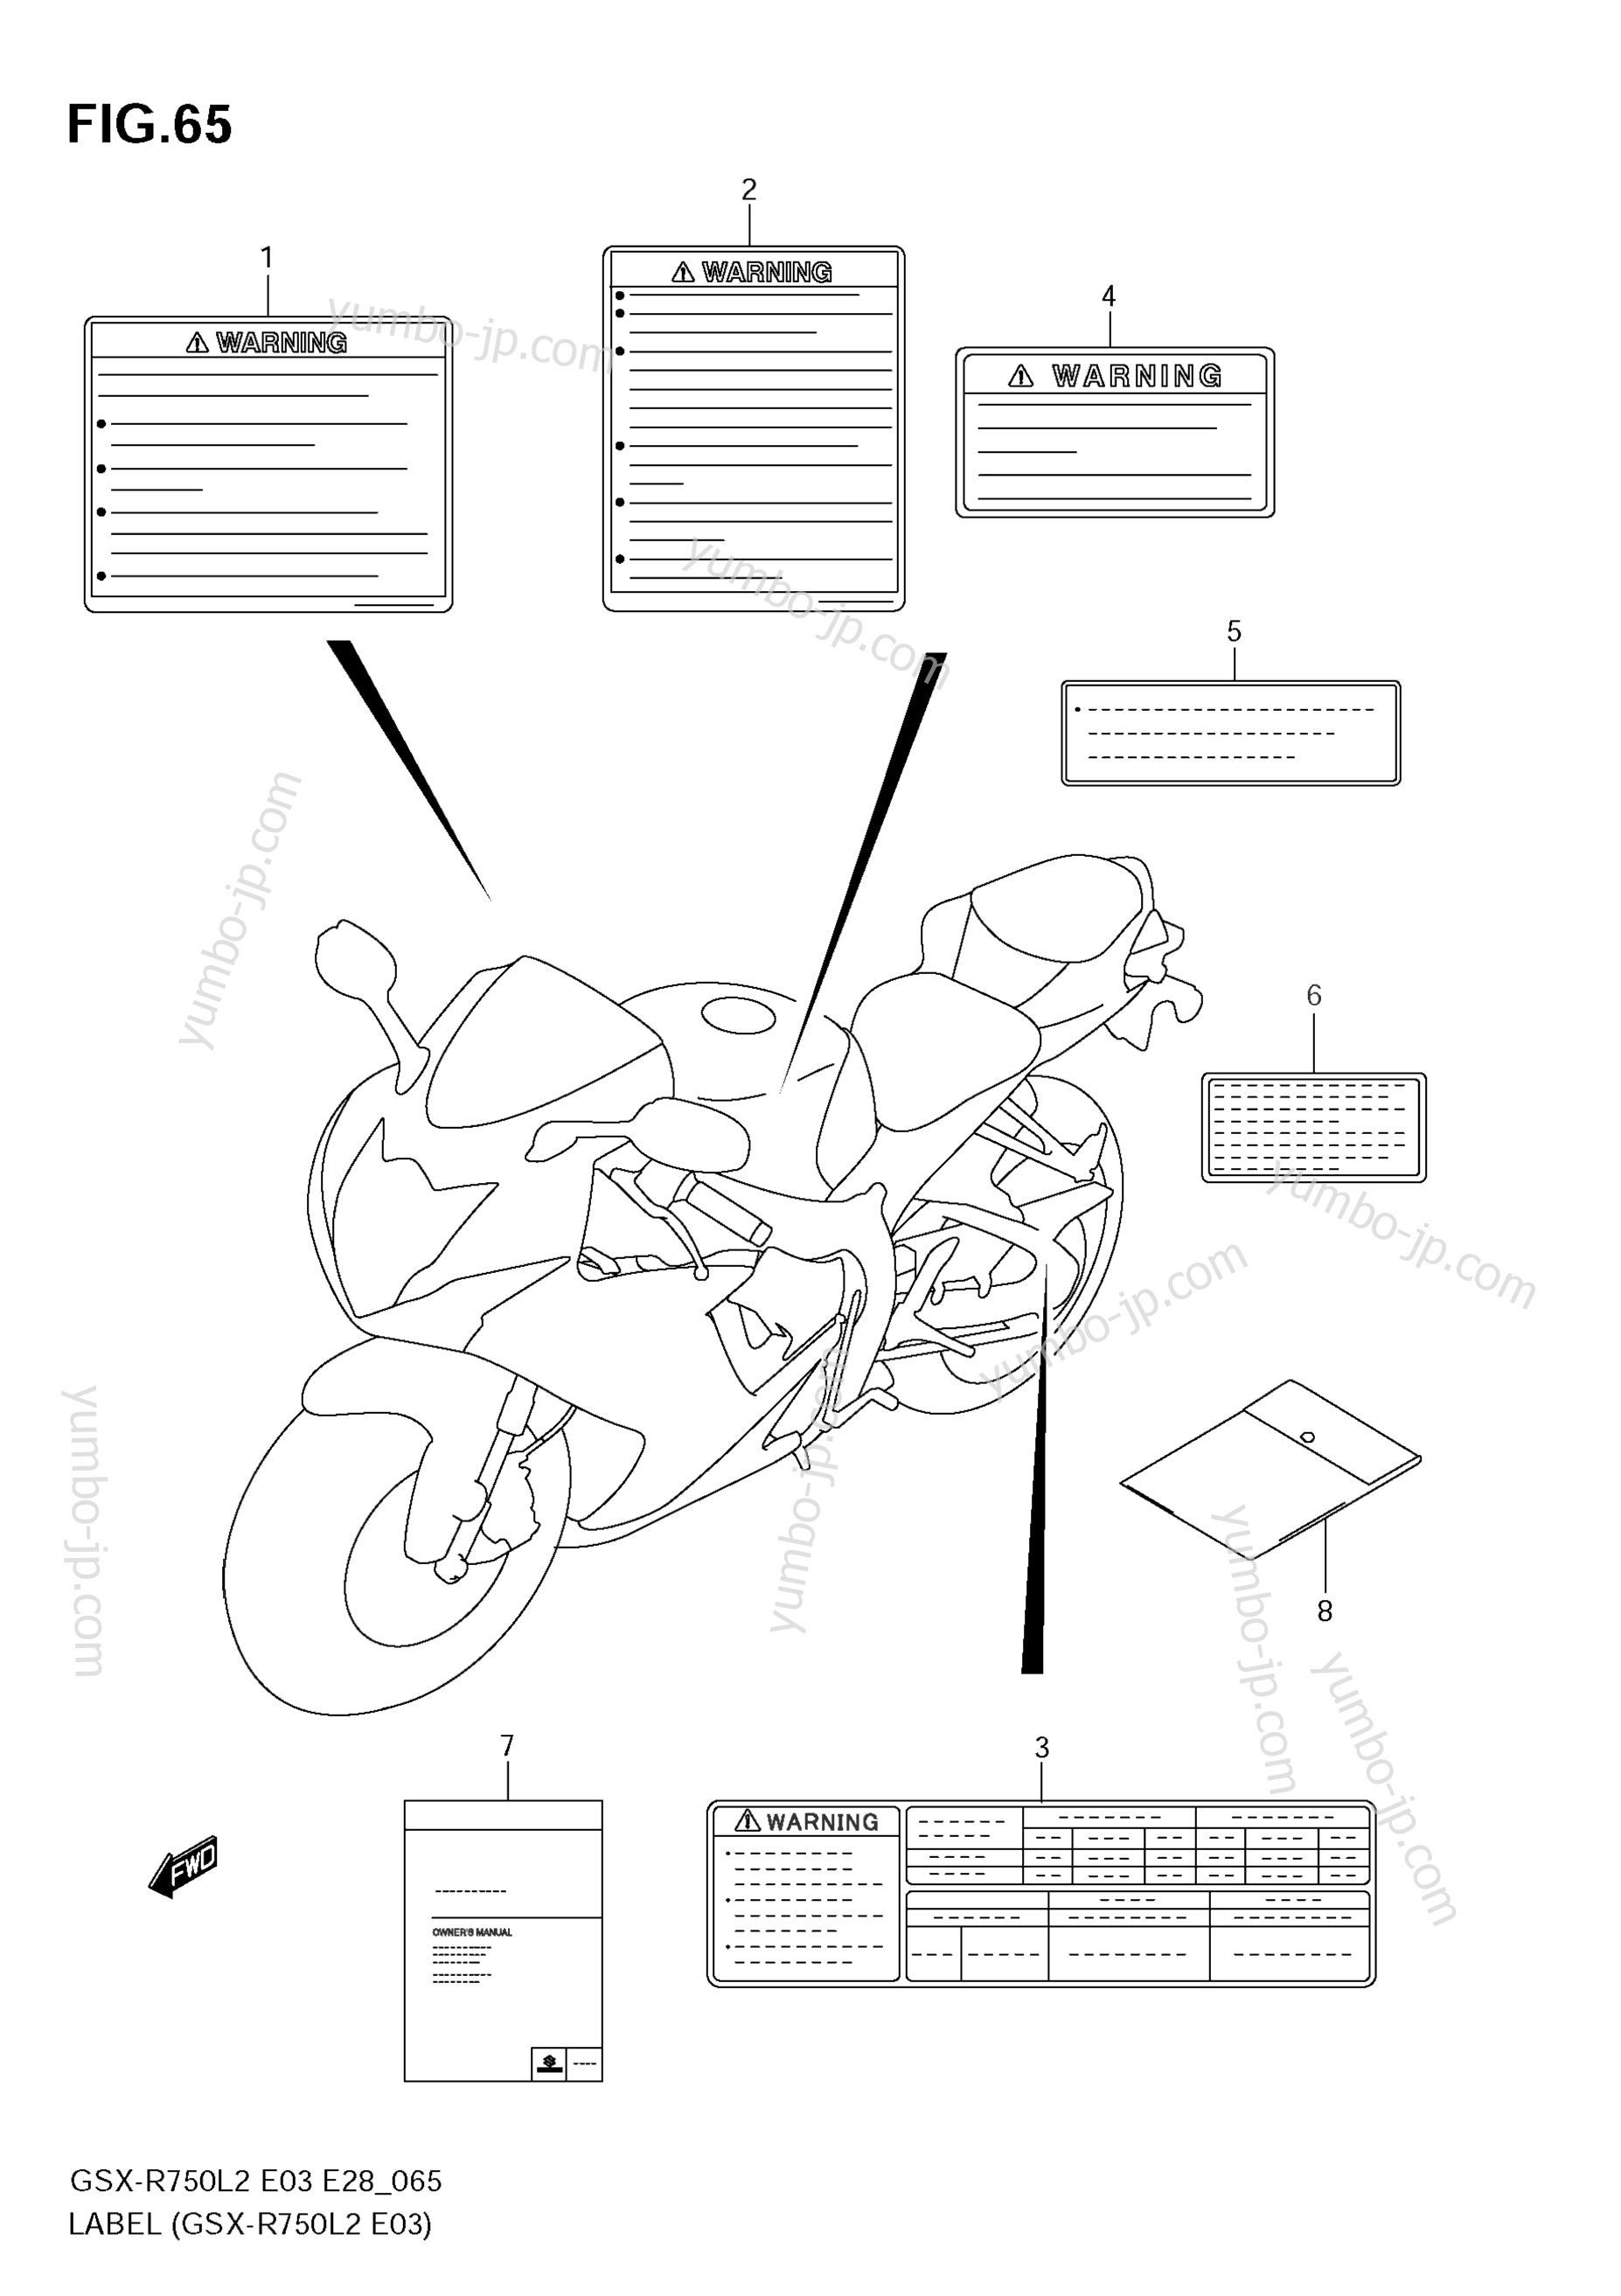 LABEL (GSX-R750 L2 E03) for motorcycles SUZUKI GSX-R750 2012 year